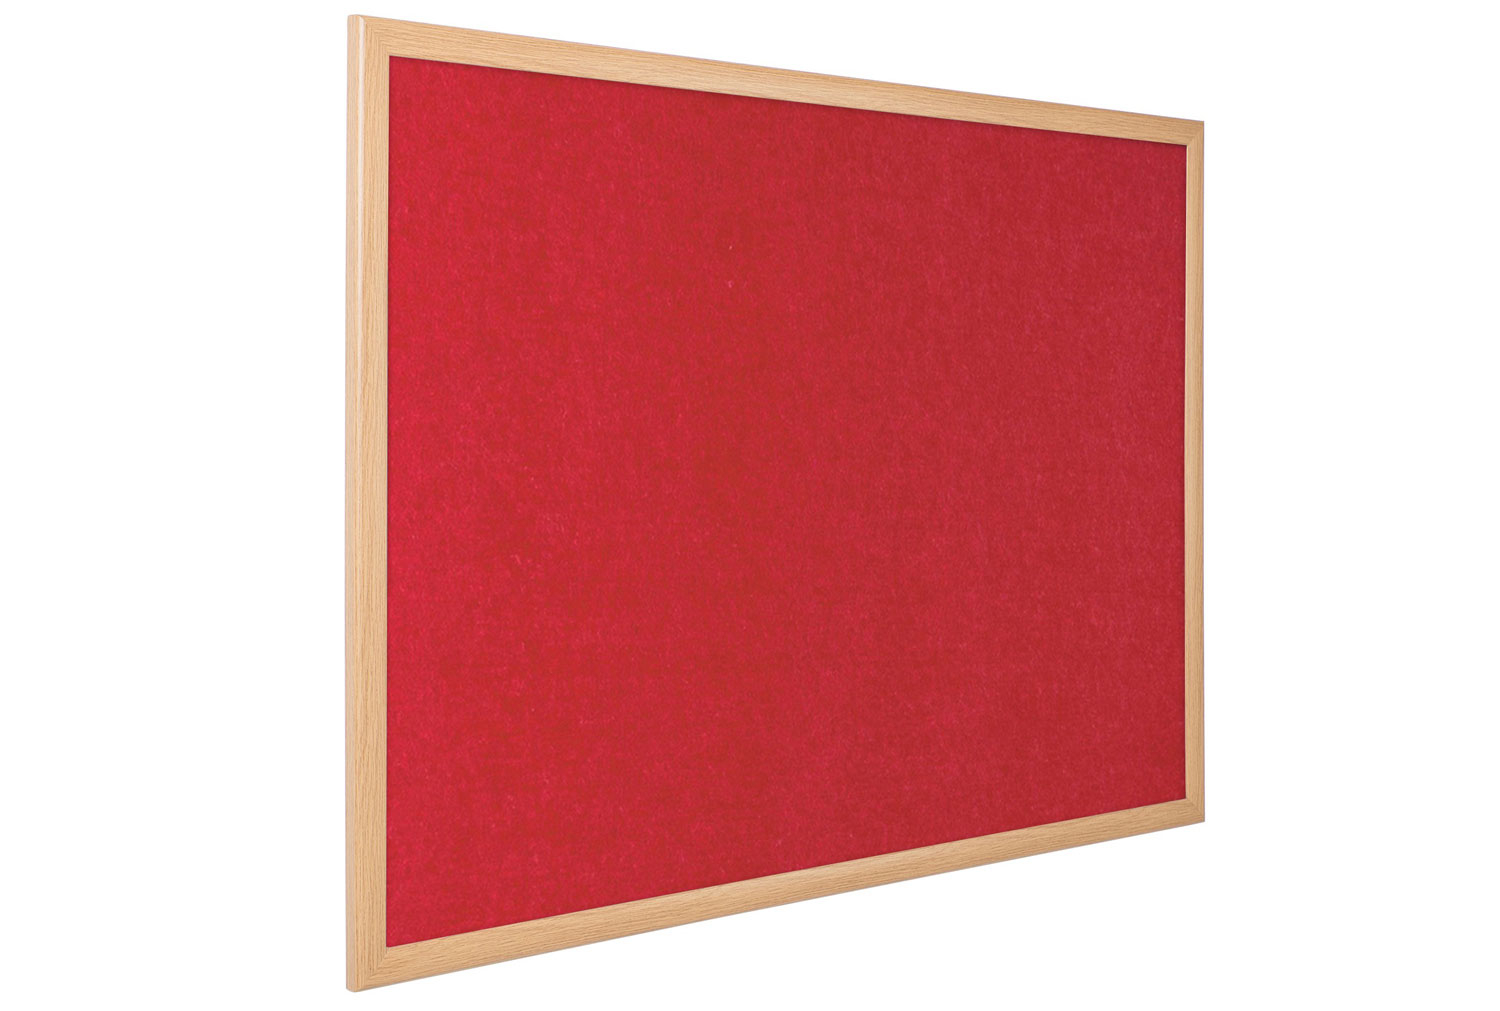 Eco-Colour Light Oak Noticeboard, 120wx90h (cm), Red